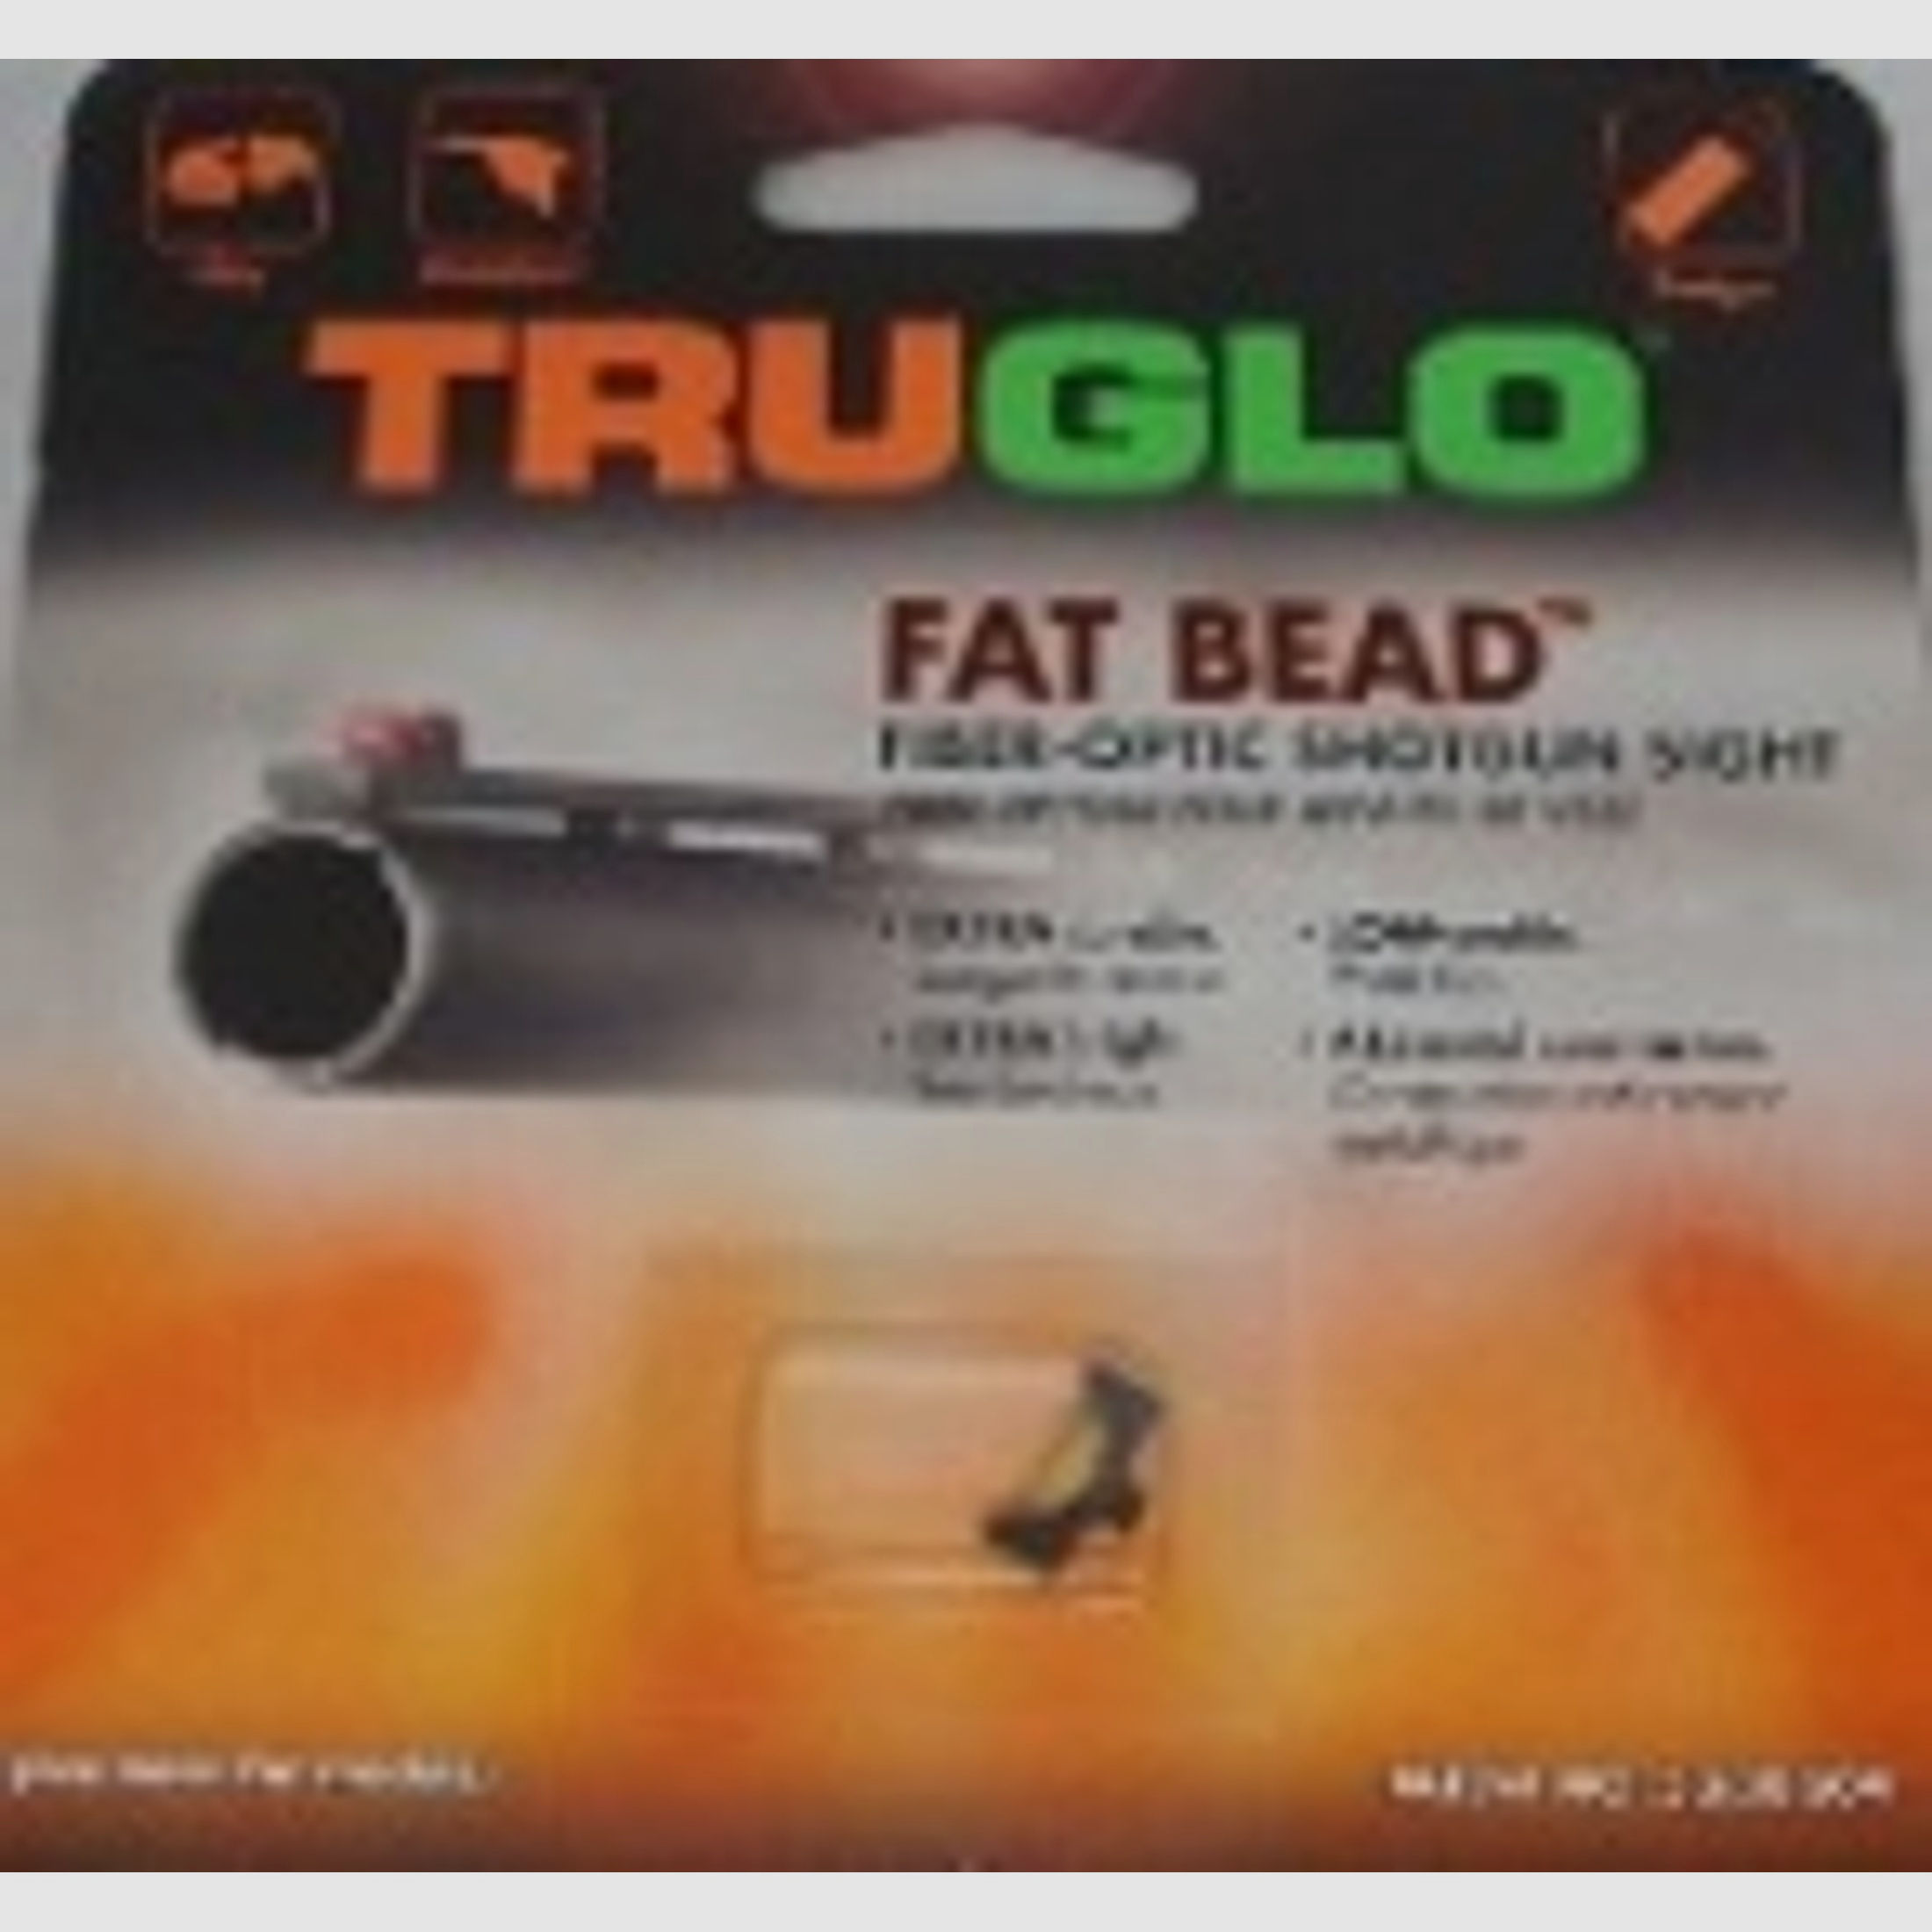 Truglo FatBeat M3,0 grün - schrauben, 13mm Metallkörper